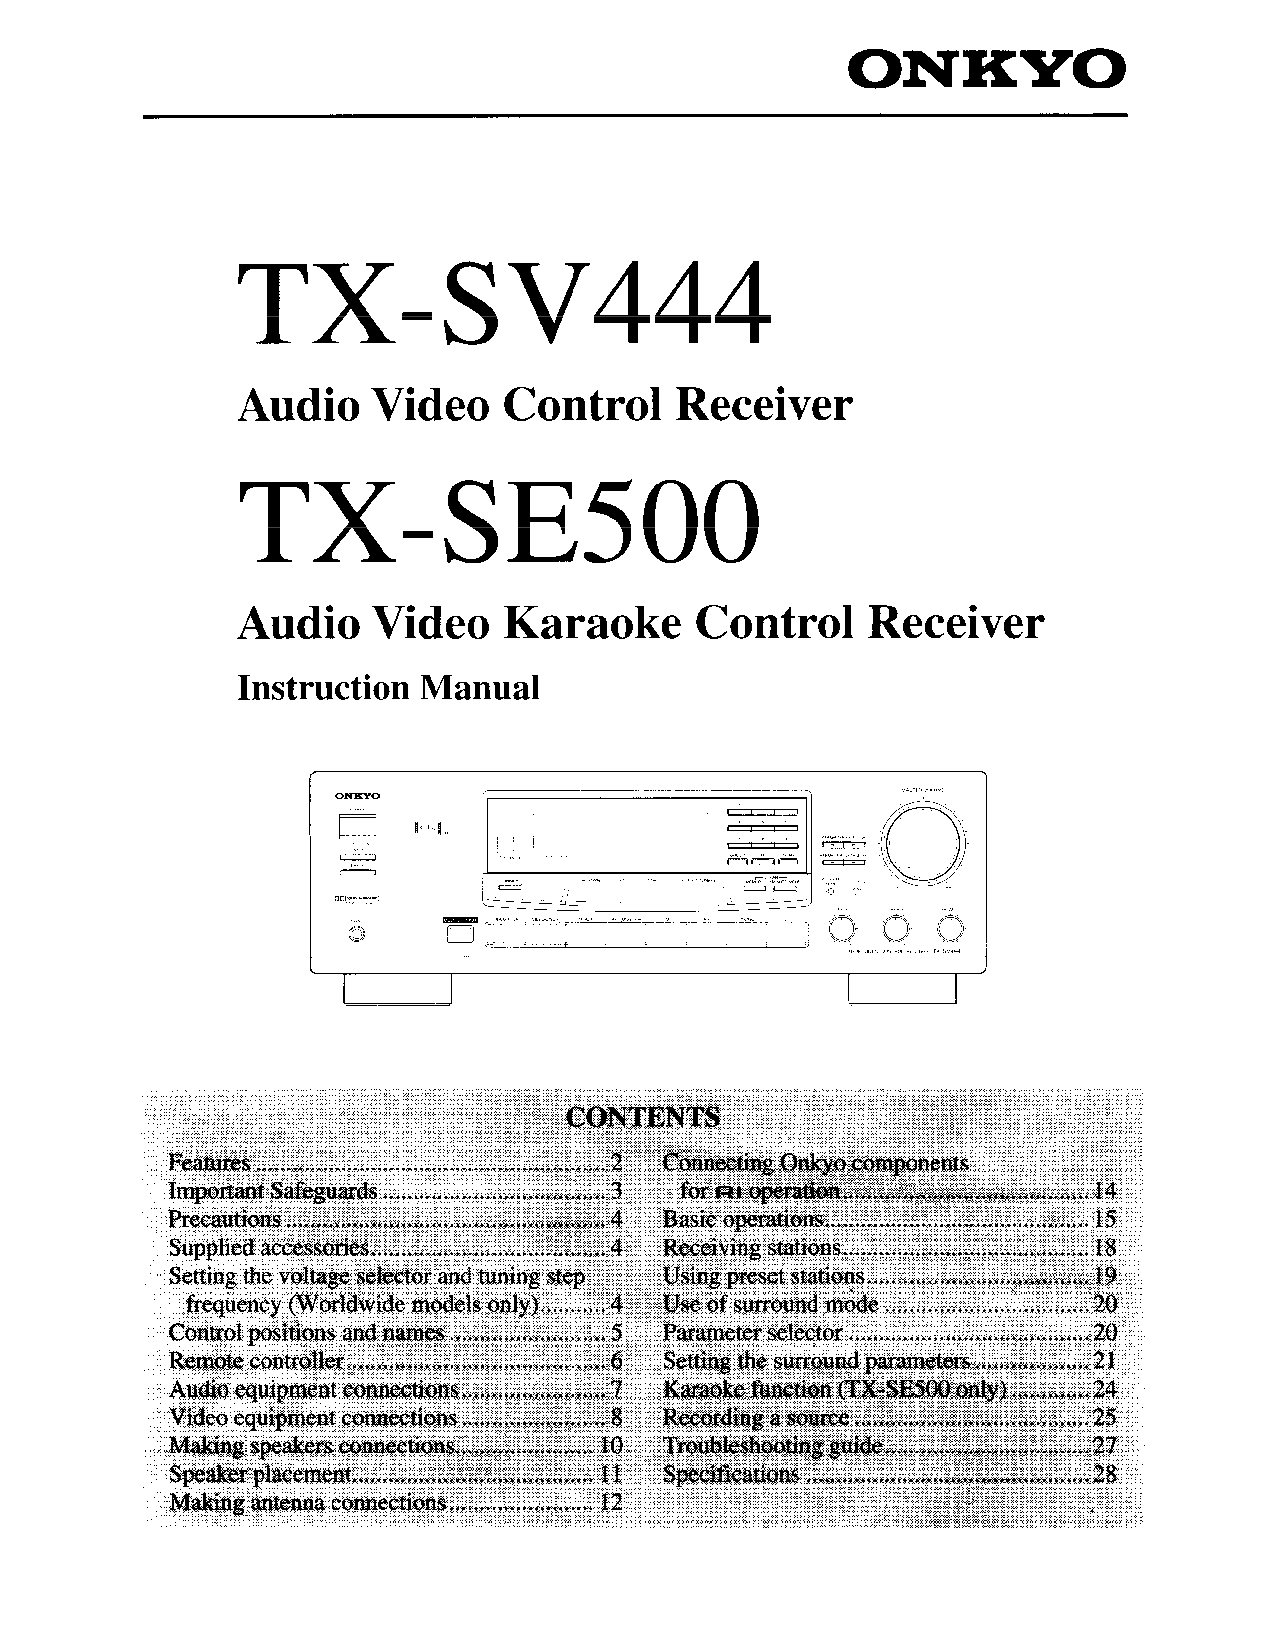 Onkyo TX-SE500, TX-SV444 Instruction Manual